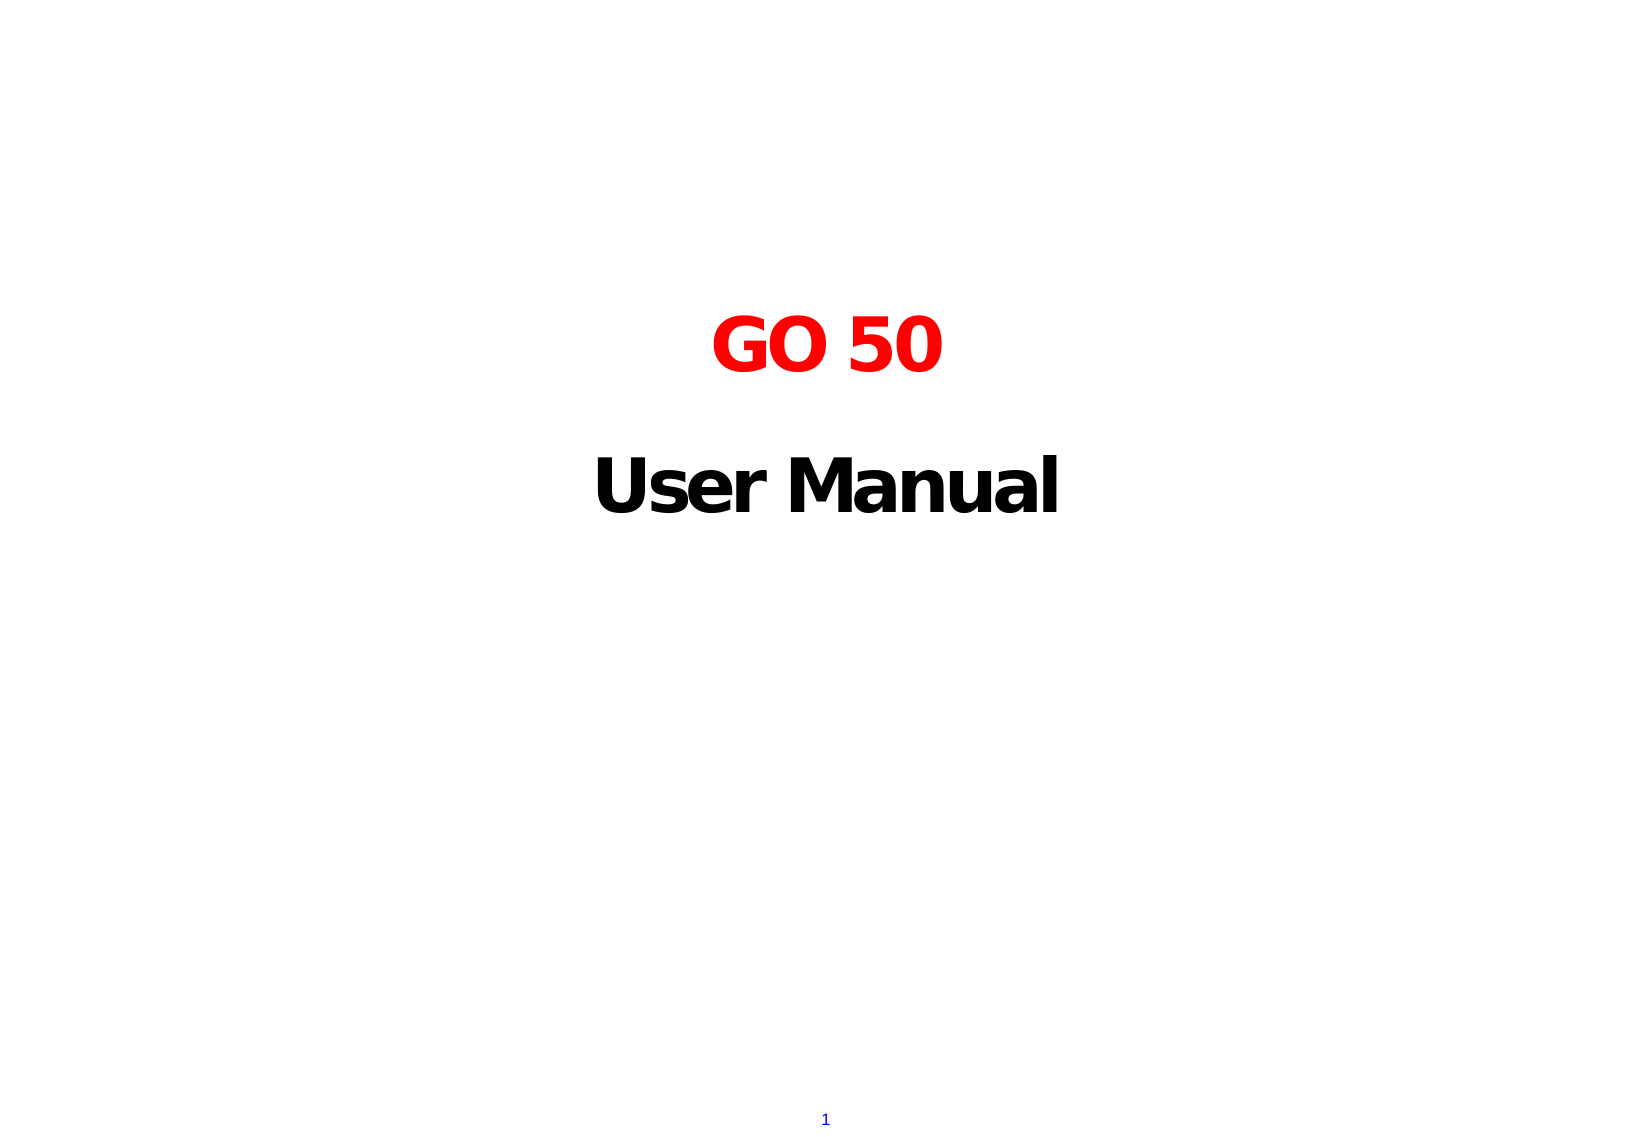  1   GO 50  User Manual                   